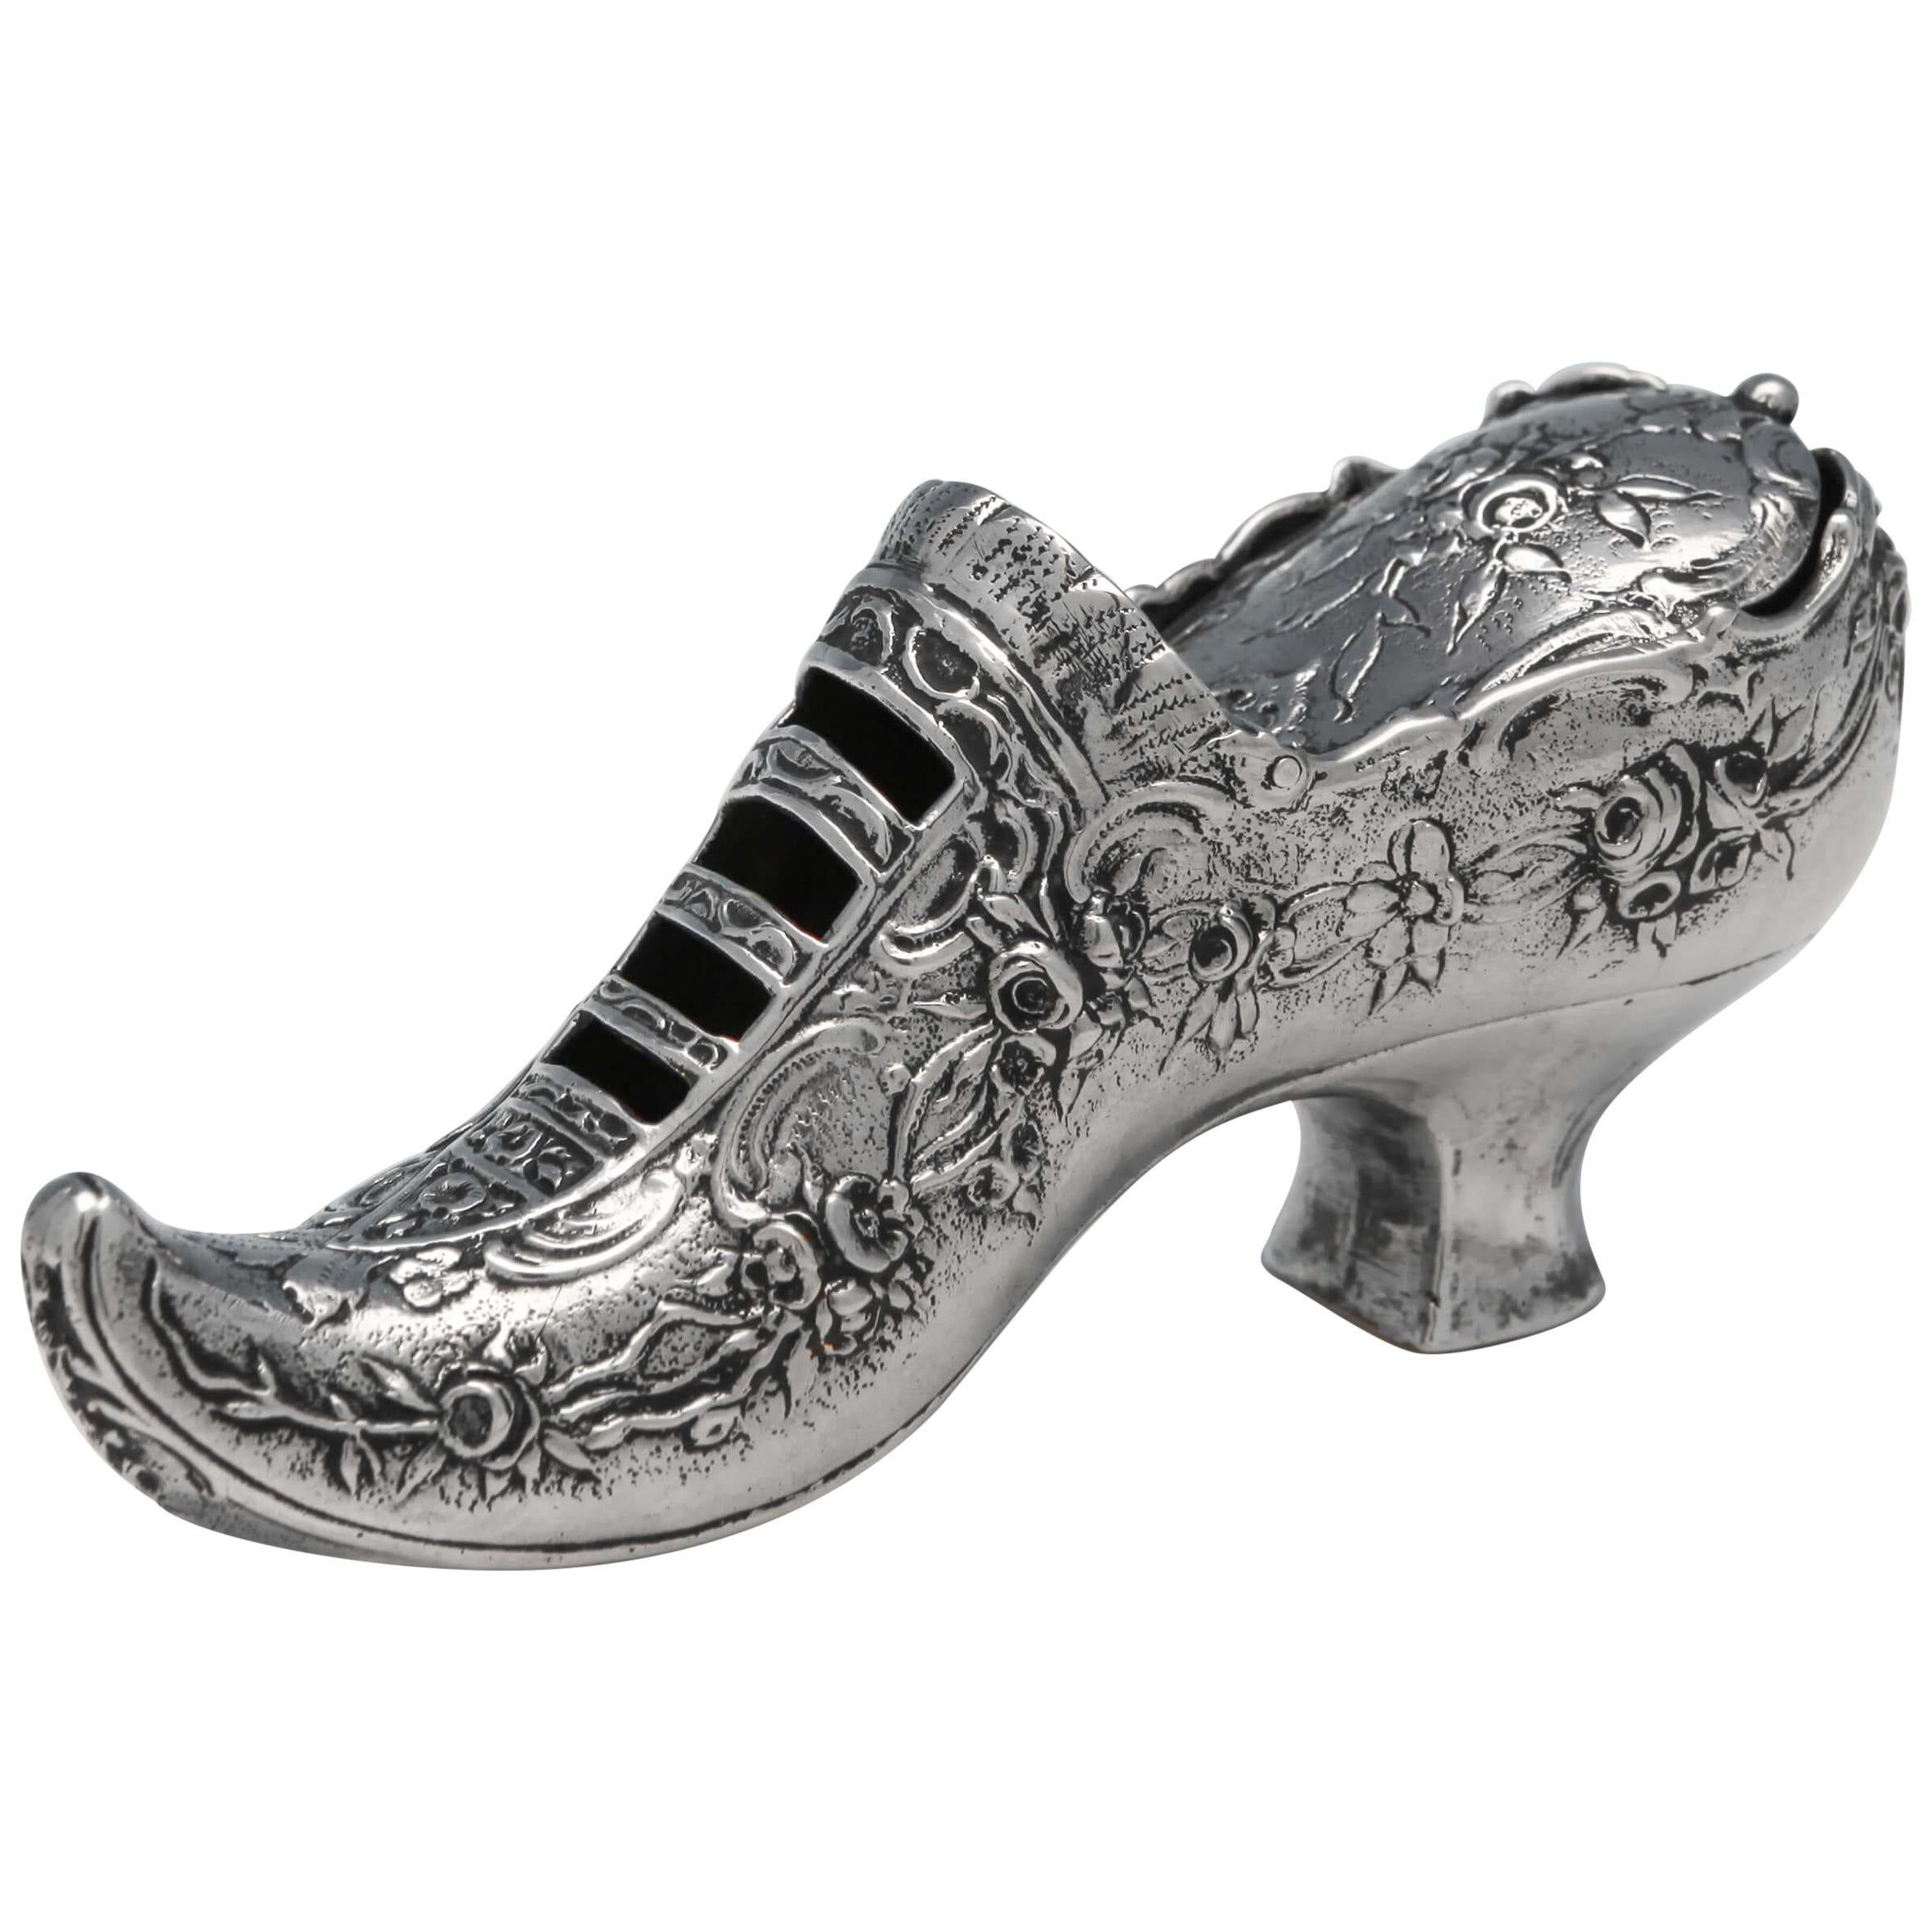 Victorian Novelty Sterling Silver Trinket Box Modelled as a Shoe